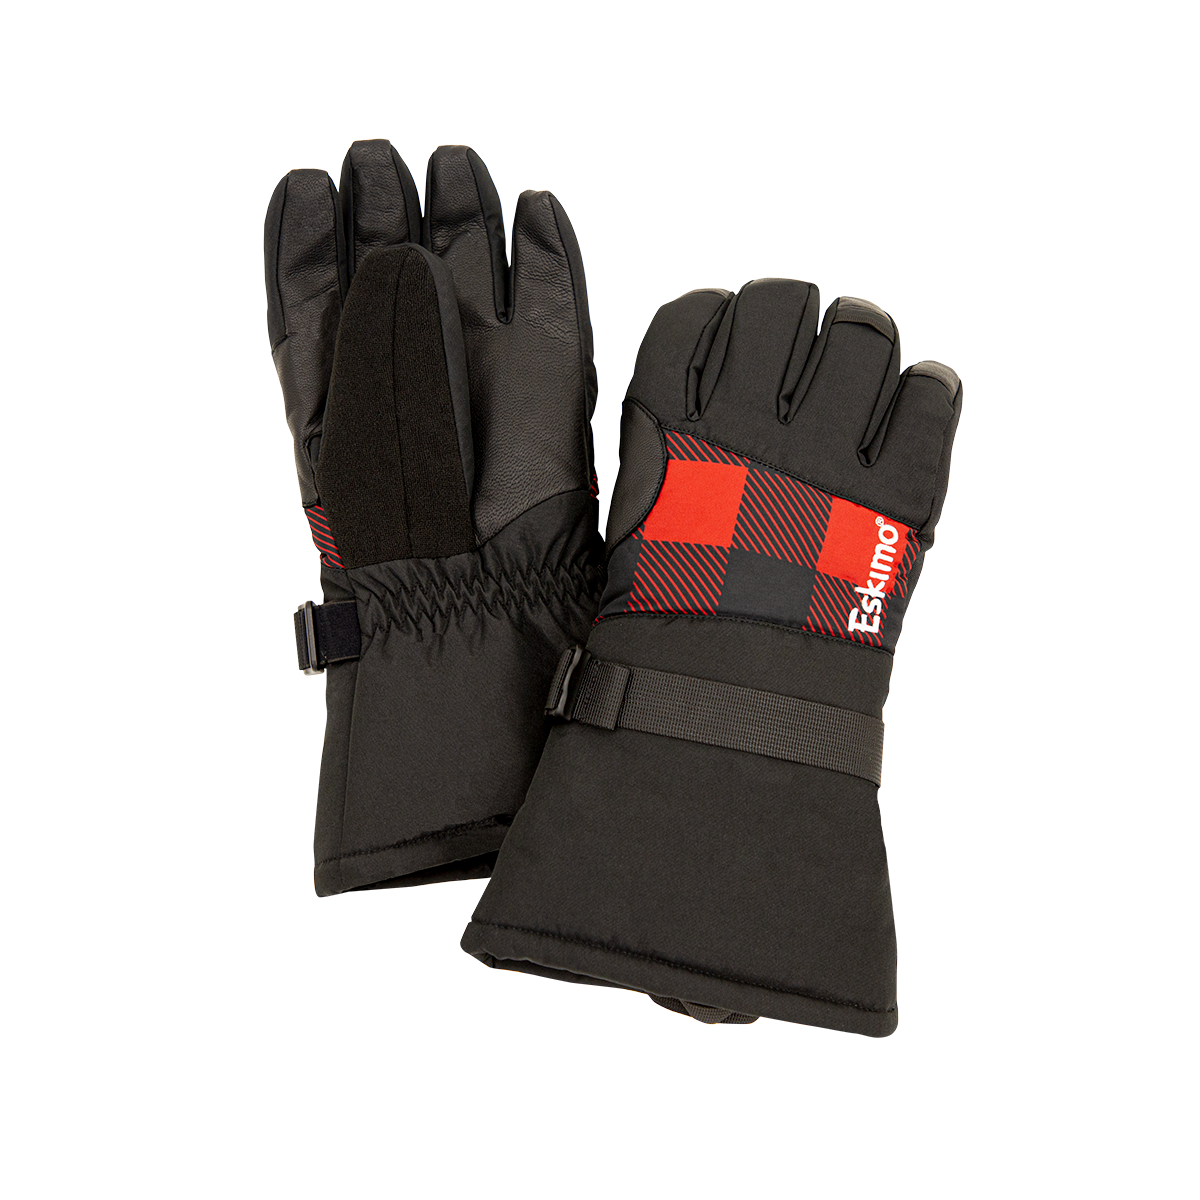 Keeper Gloves (with Liner Gloves)